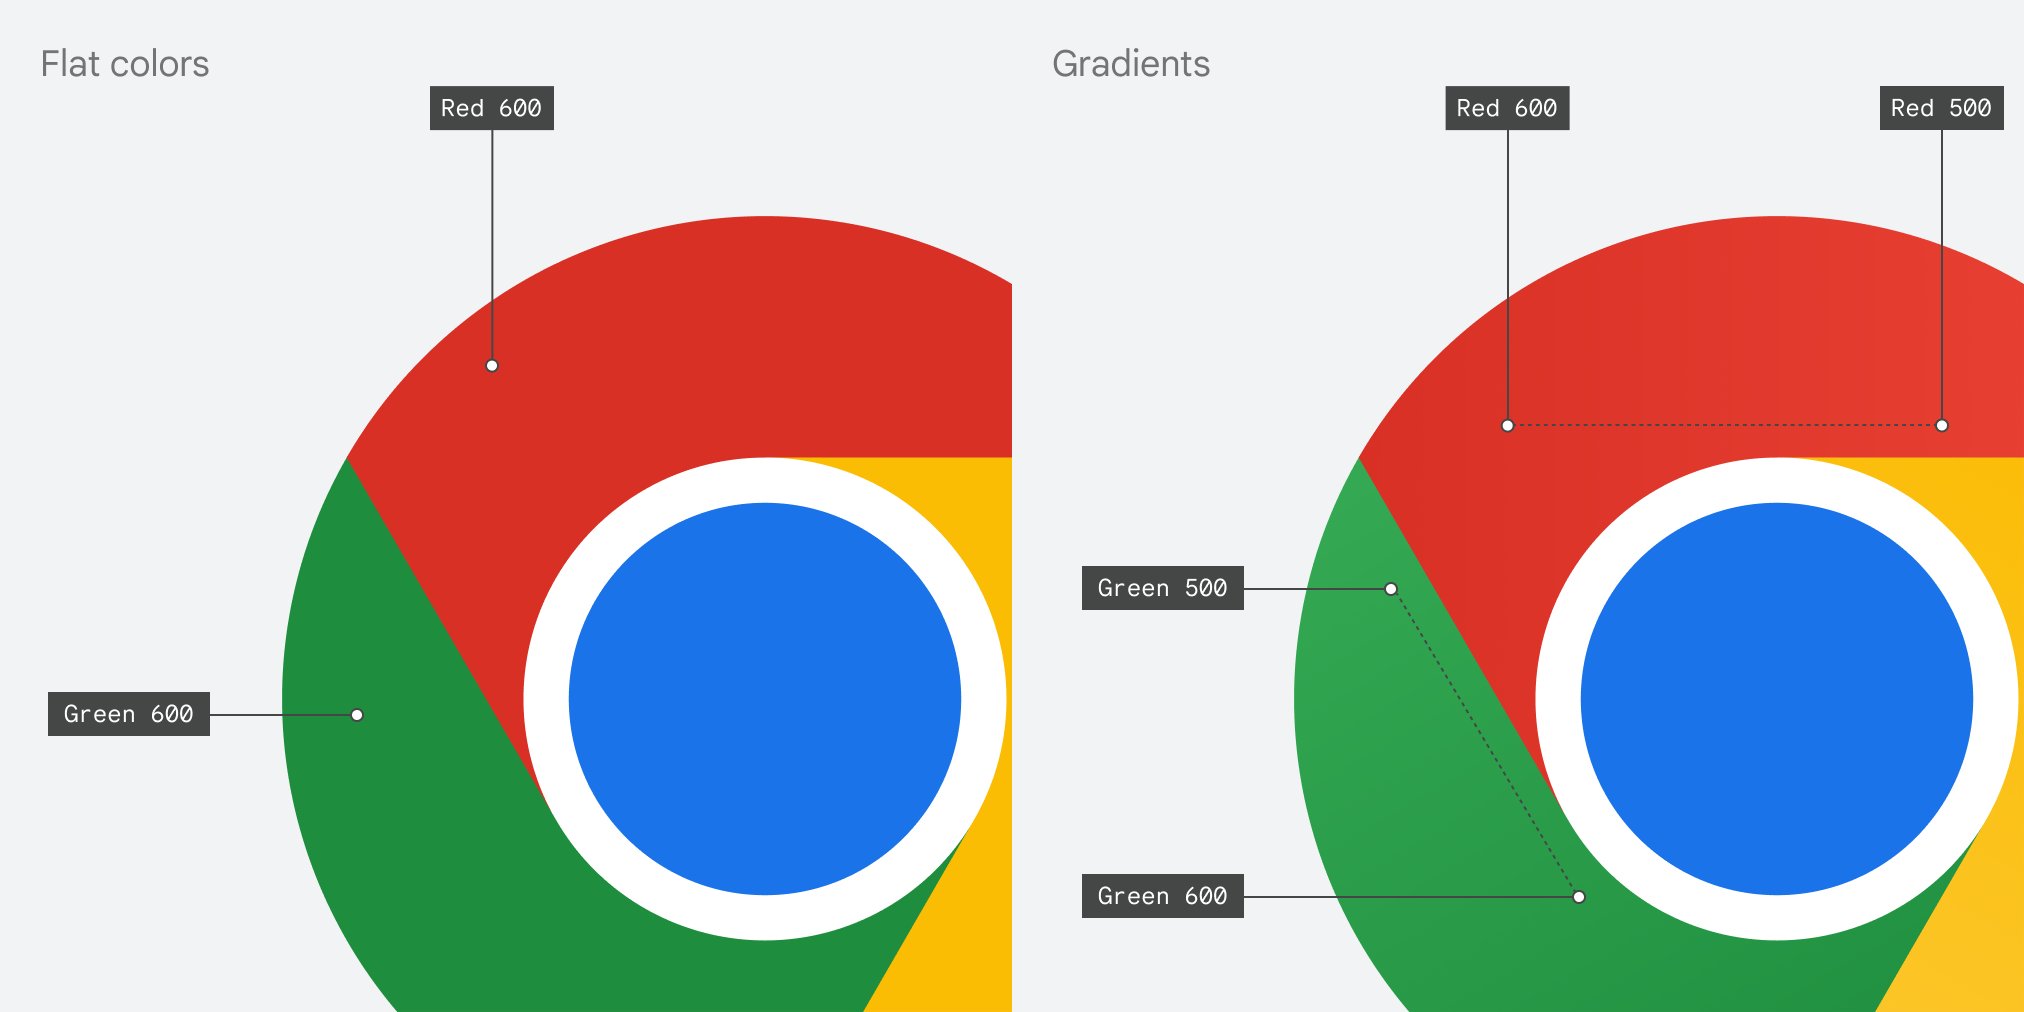 Google Chrome瀏覽器正式推出100版 全新圖示登場 - 電腦王阿達